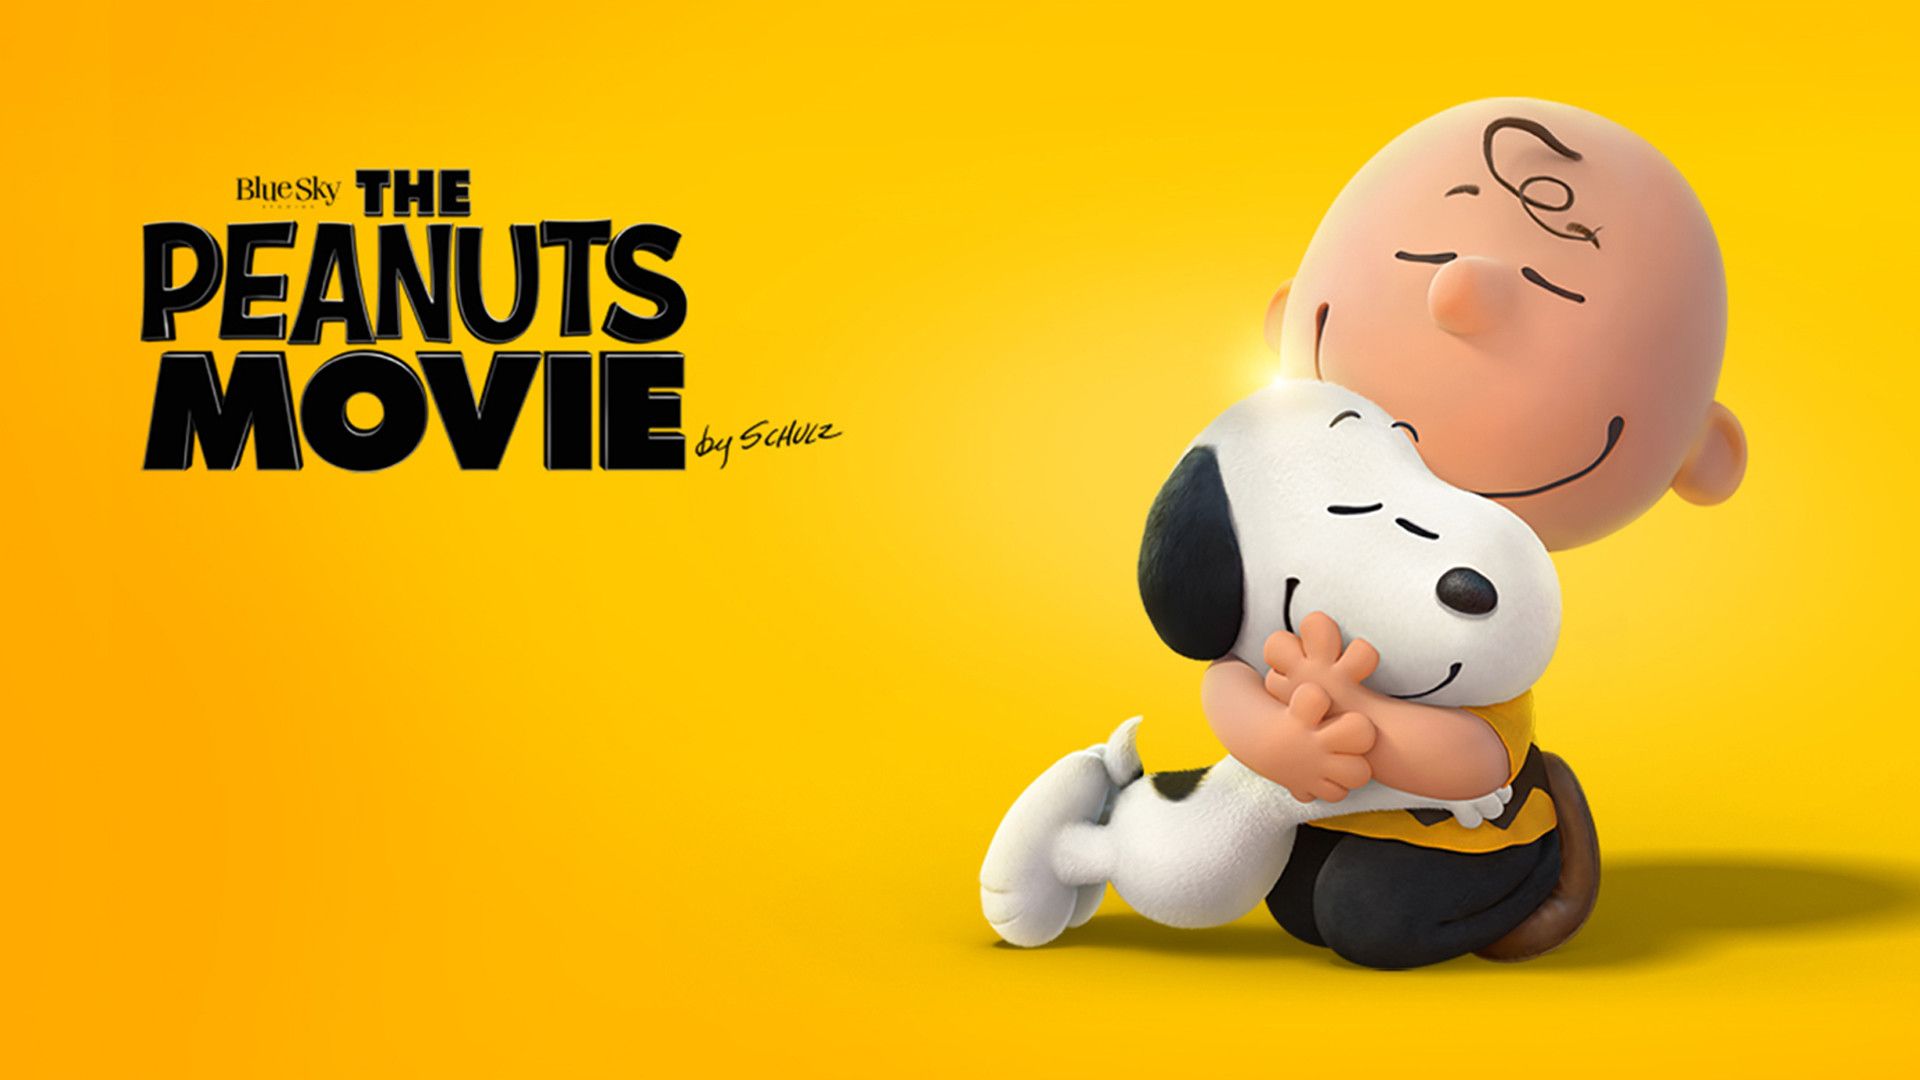 The peanuts movie wallpaper - Charlie Brown